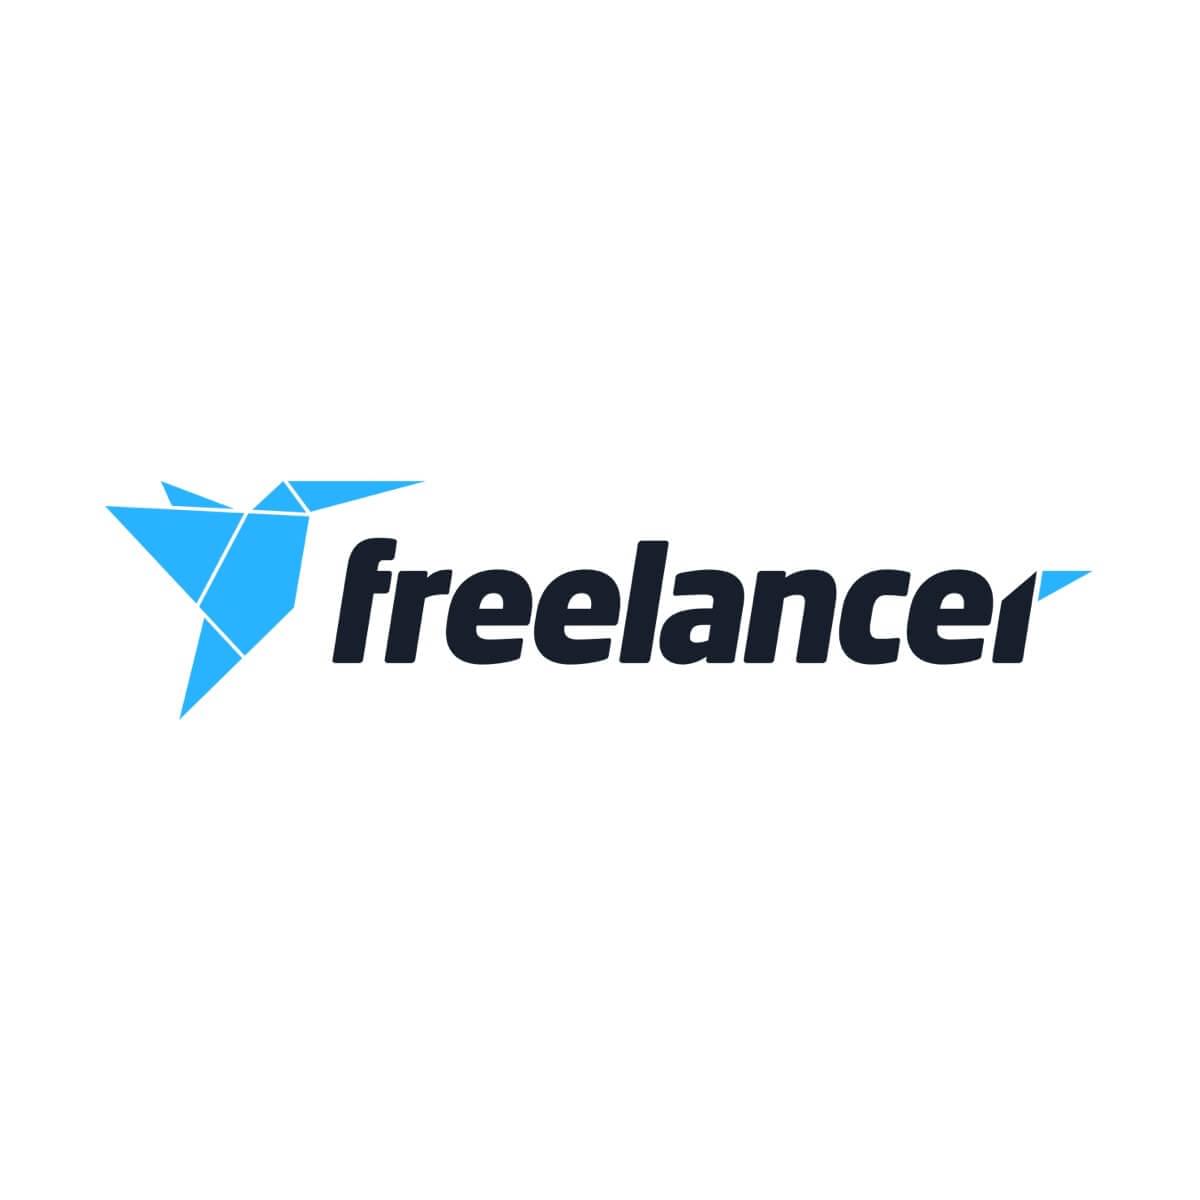 www.freelancer pluspng.com